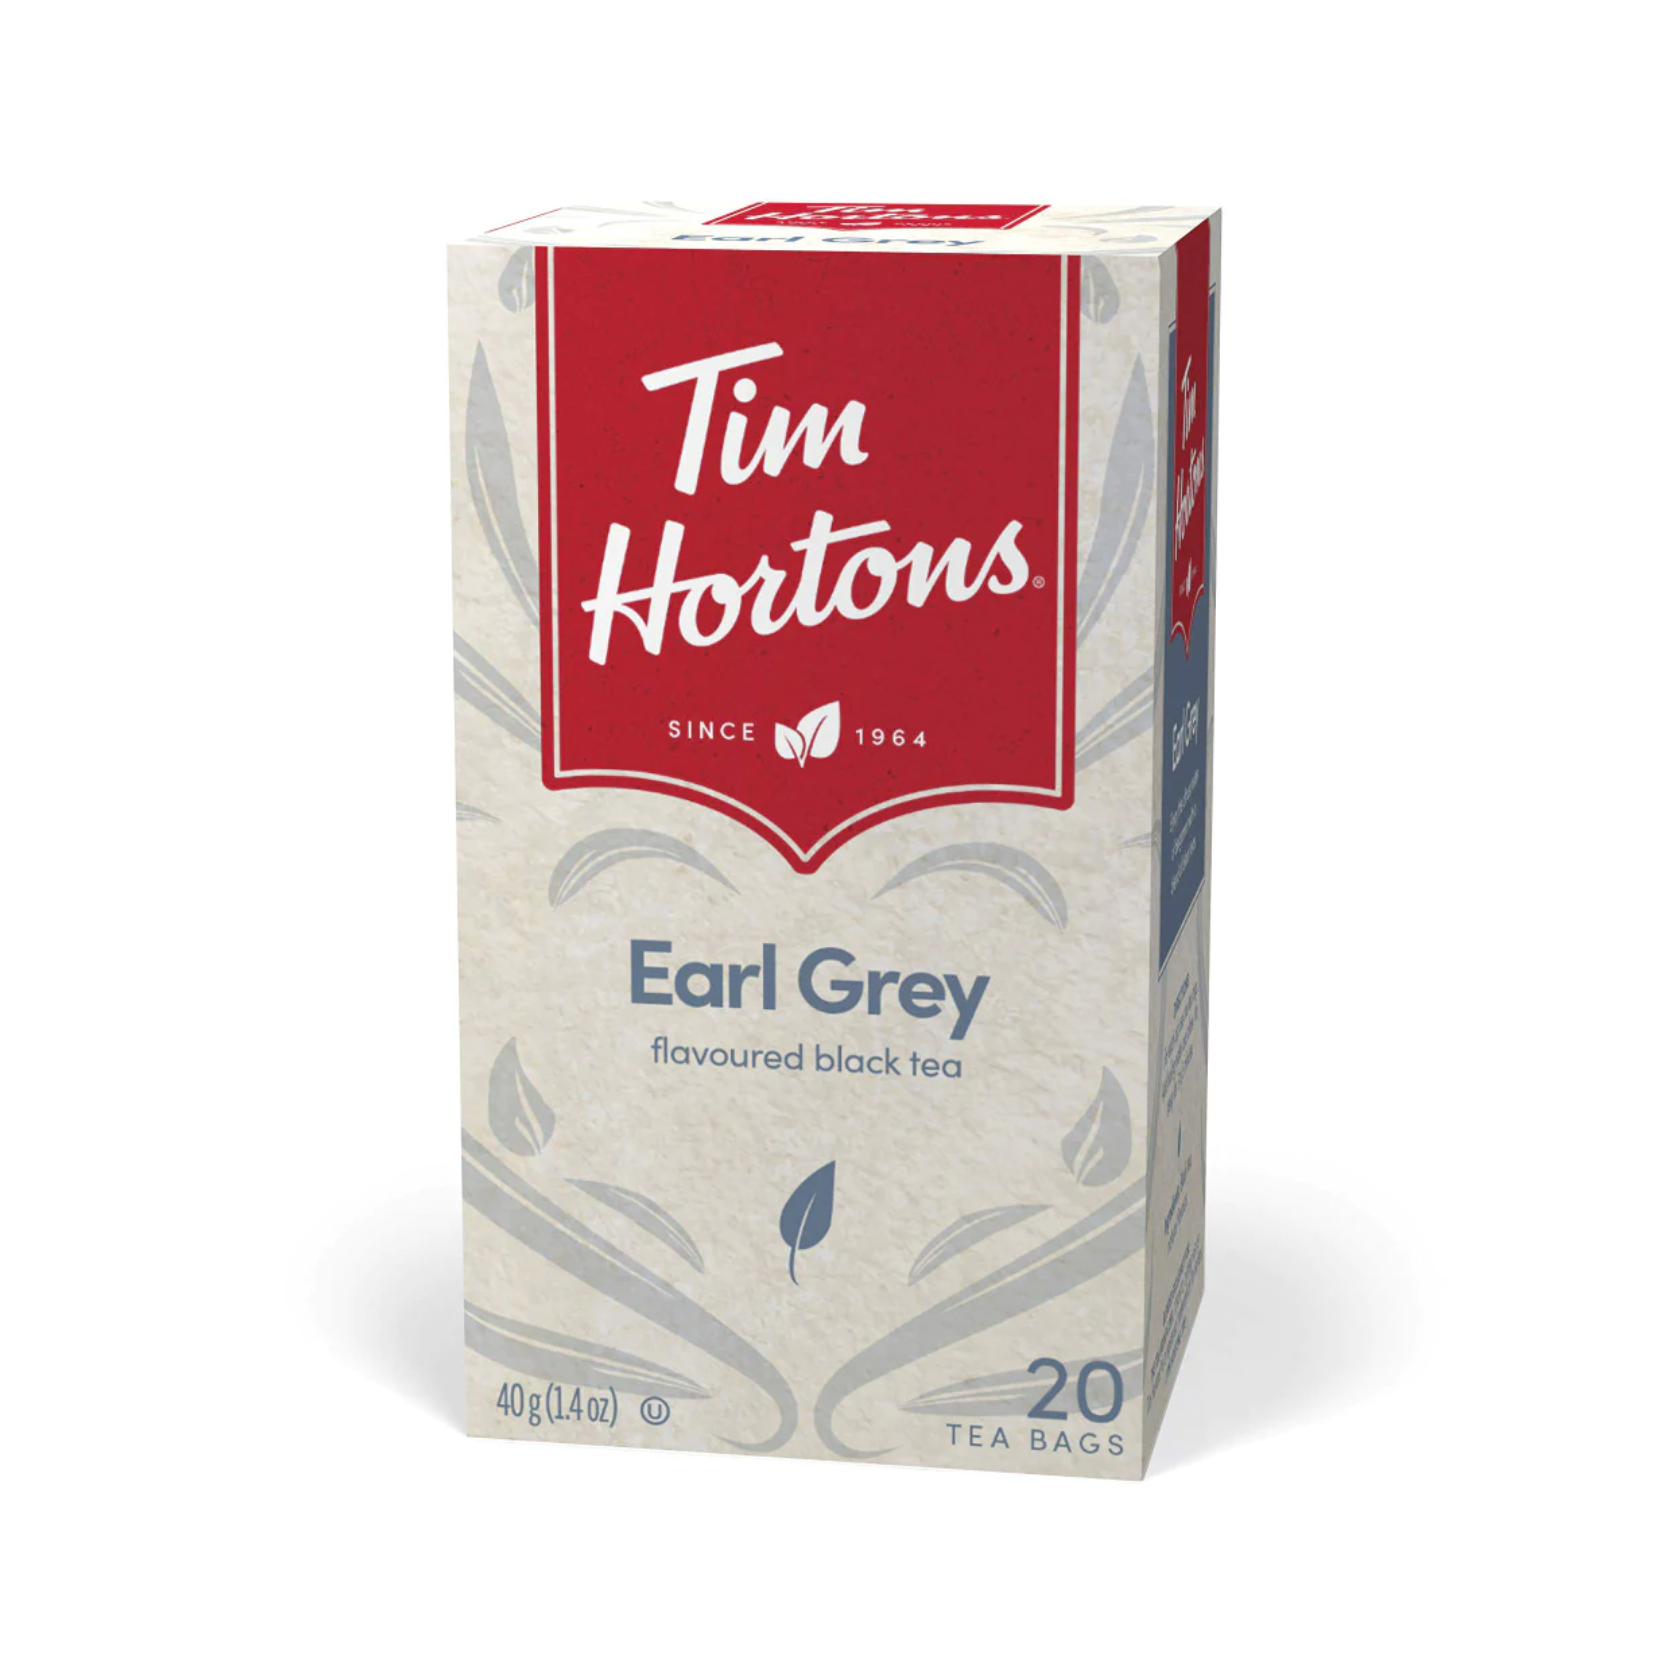 Tim Hortons Earl Grey Tea 20ct